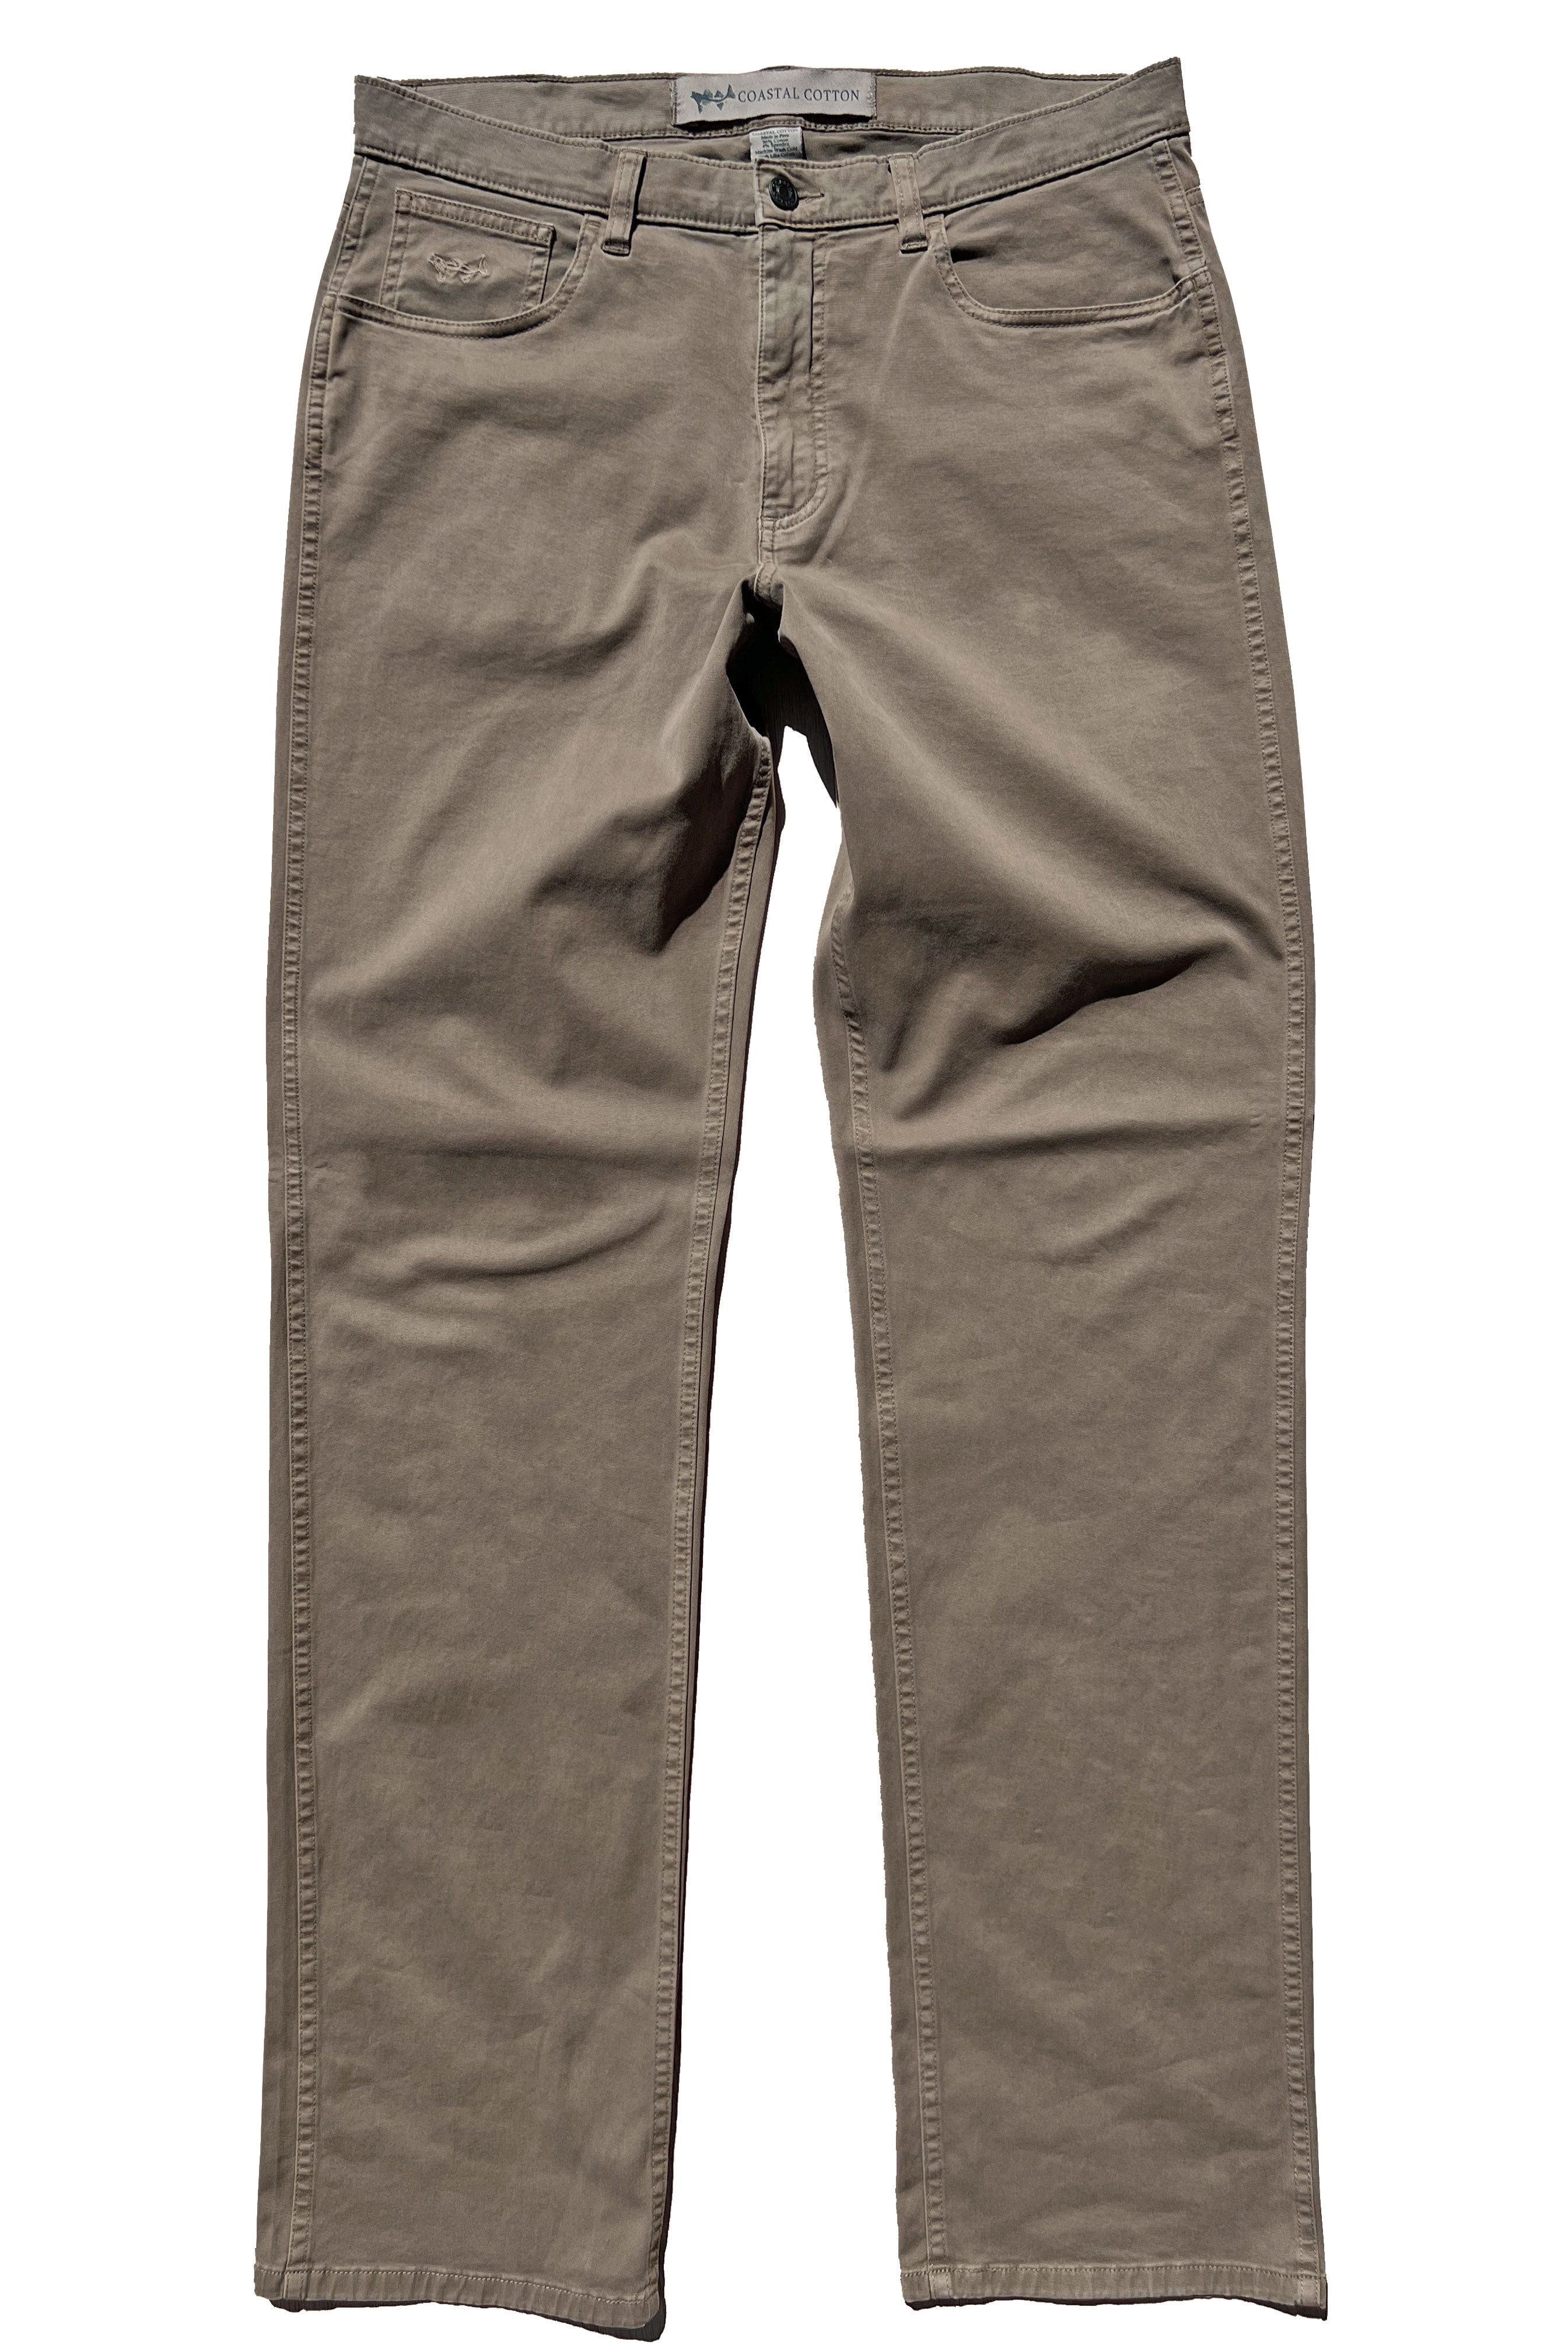 Taupe Regular Fit Five Pocket Travel Pant - MEN Pants